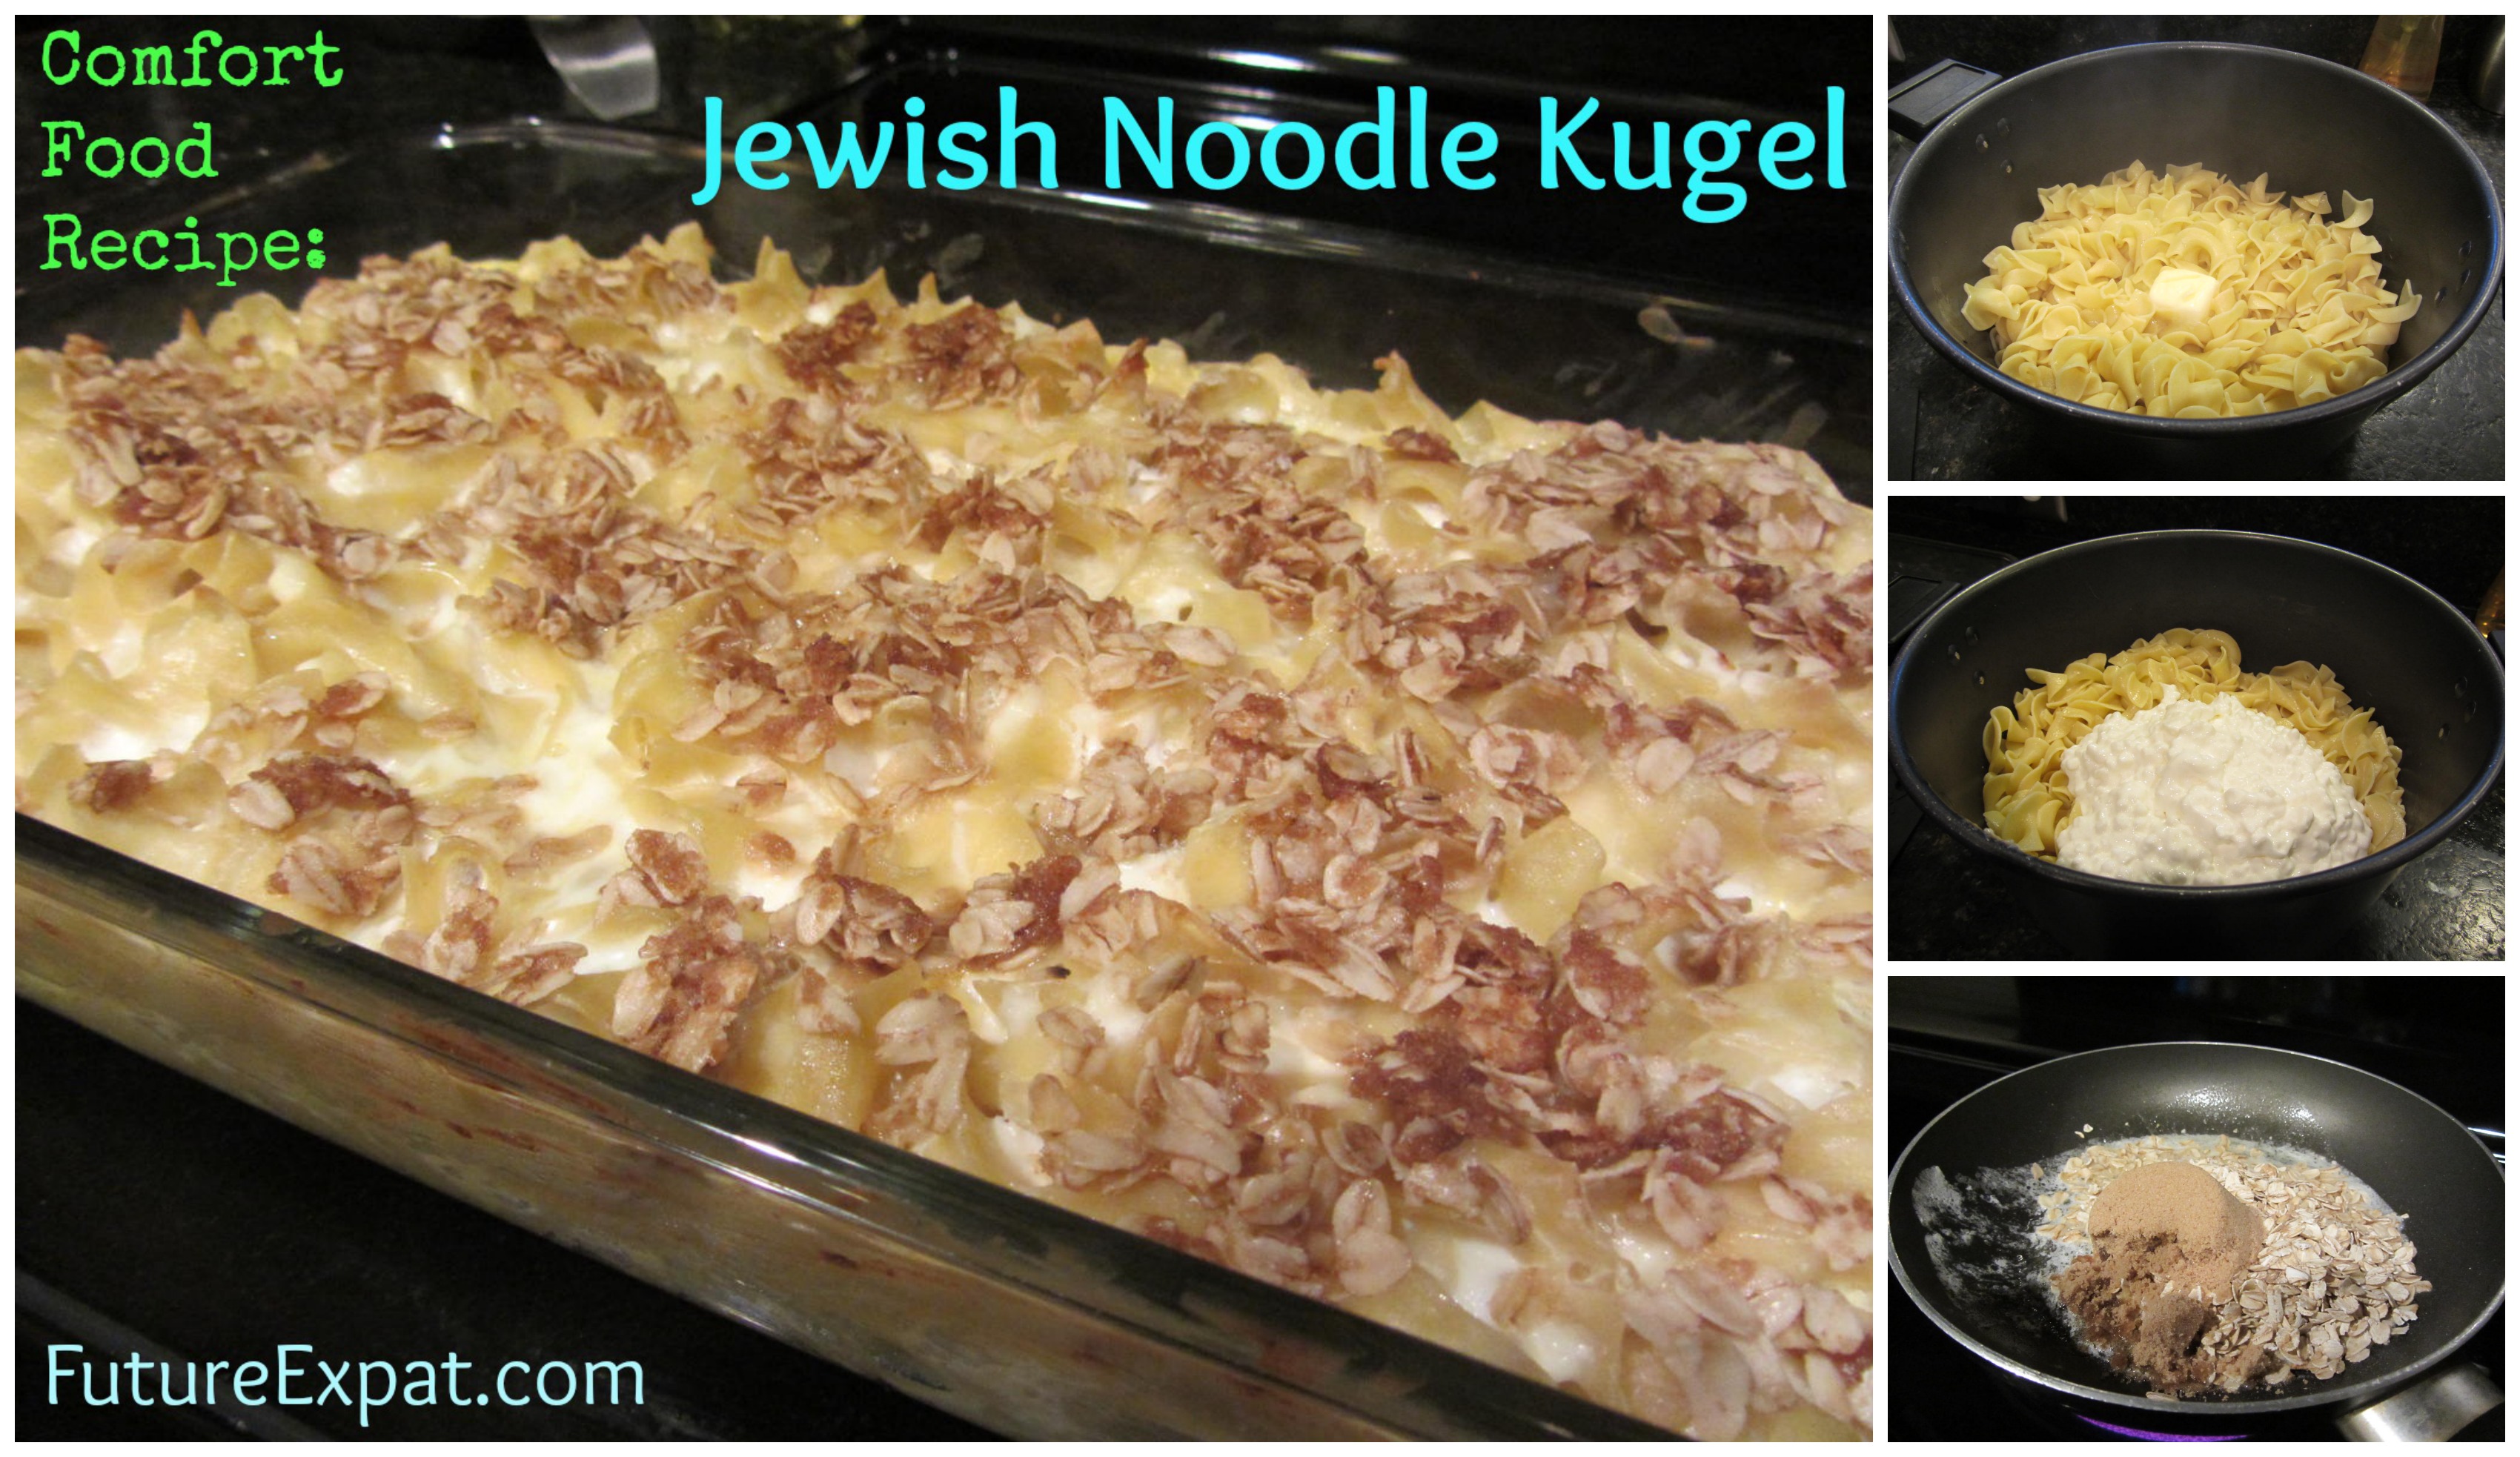 Comfort Food Jewish Noodle Kugel Recipe Future Expat